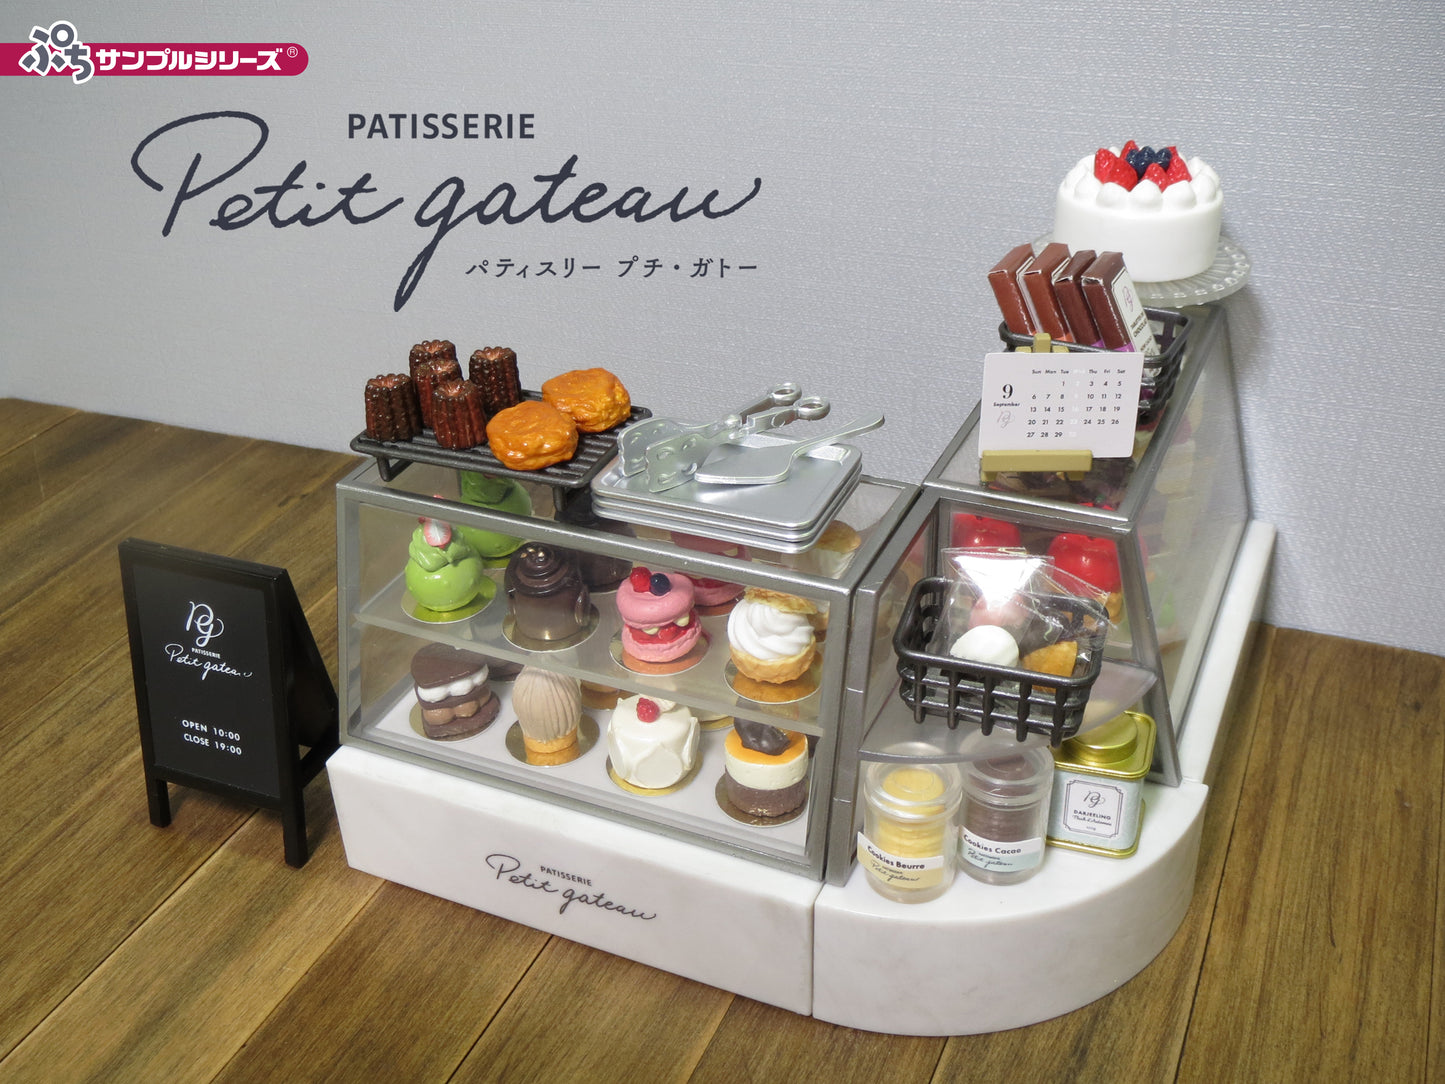 Re-ment Miniature Patisserie Petit Gateau Cake Shop outdoor menu stand -  No. 2